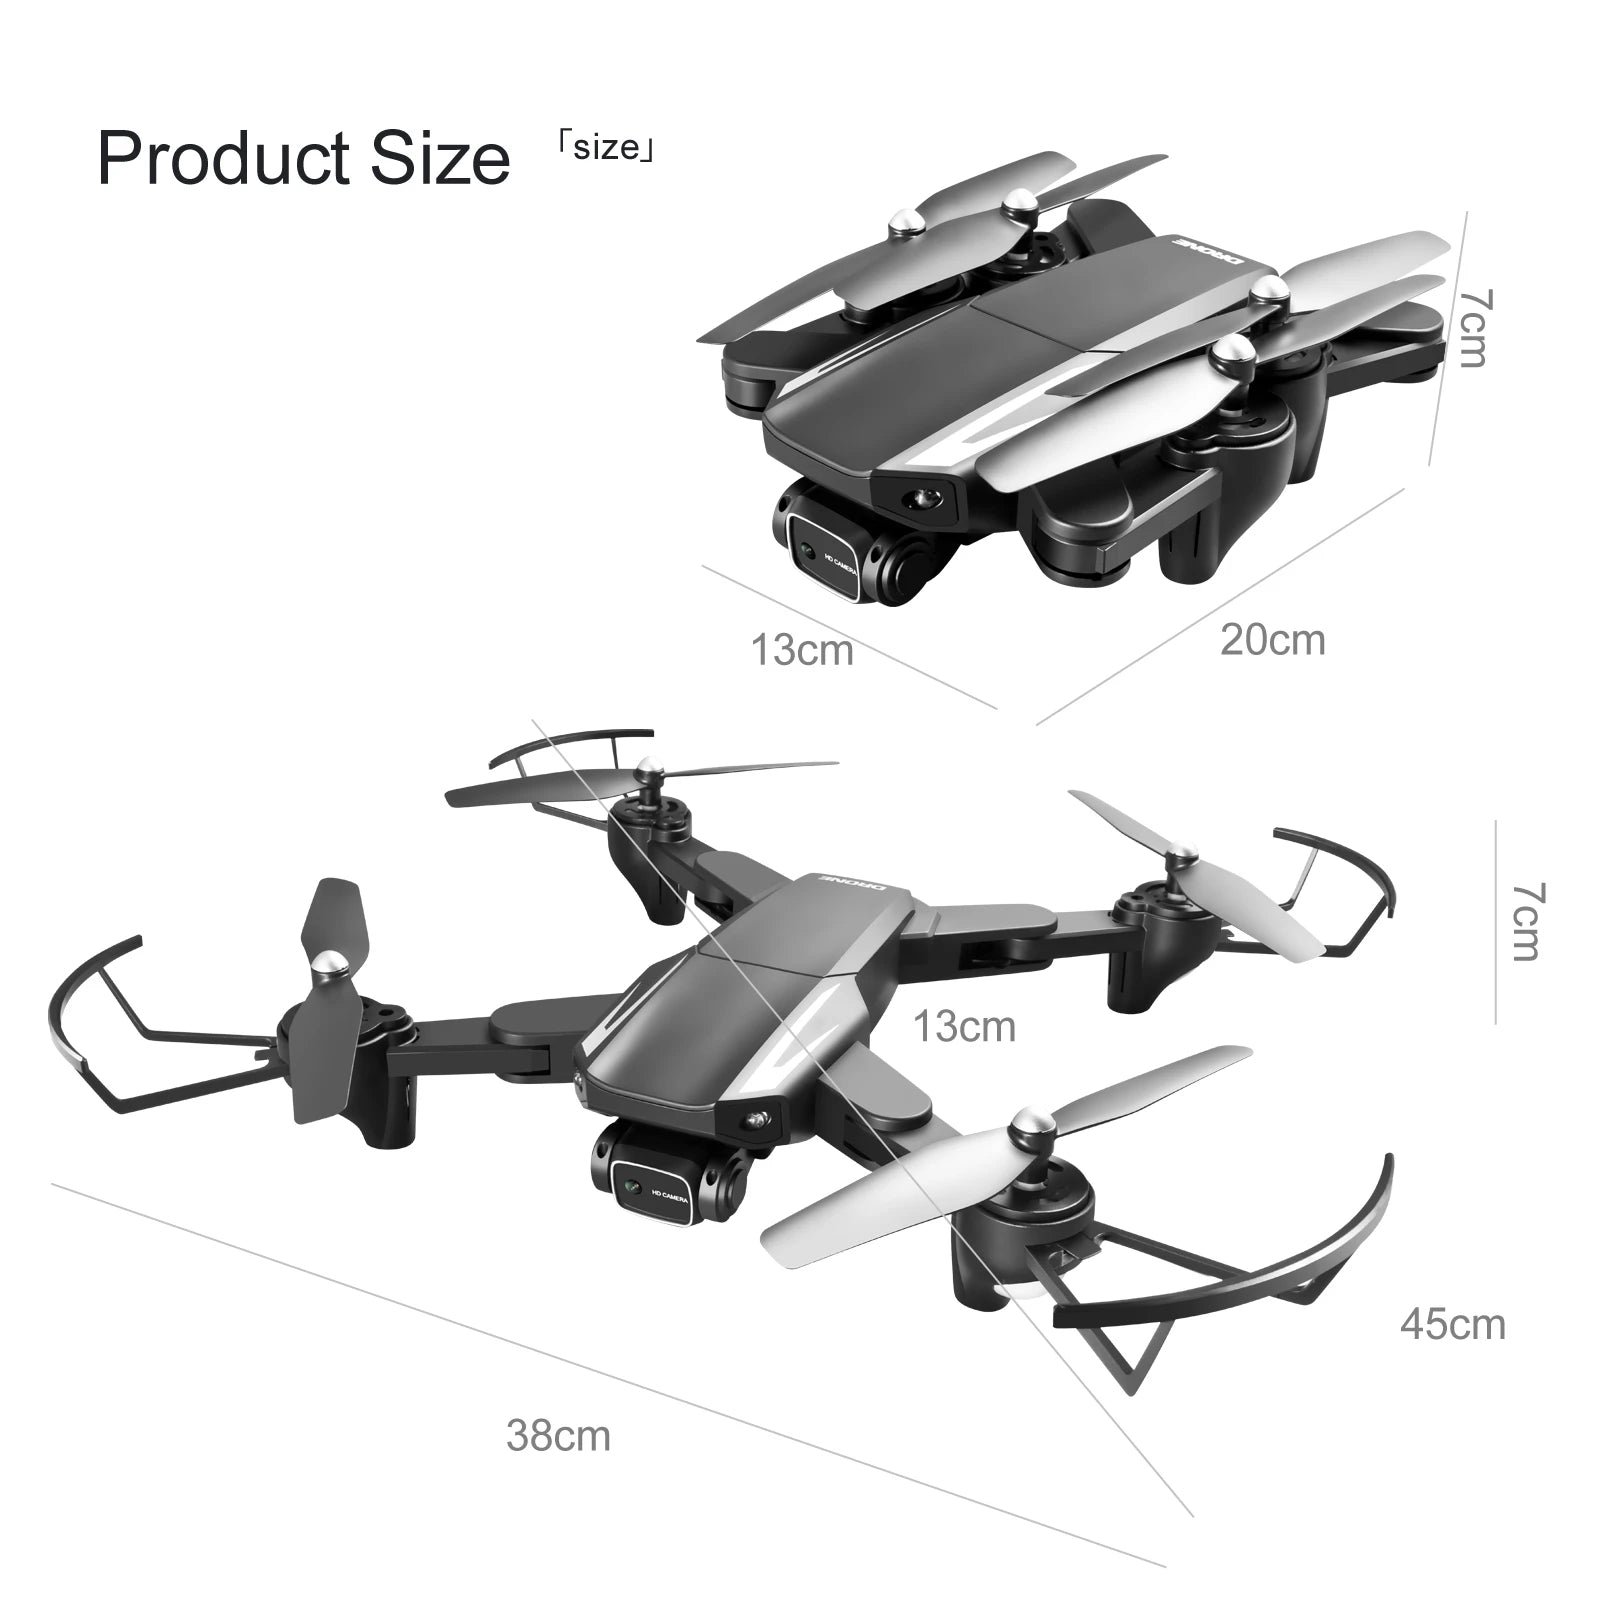 S93 Drone, product size tsize] 9' 13cm 20cm